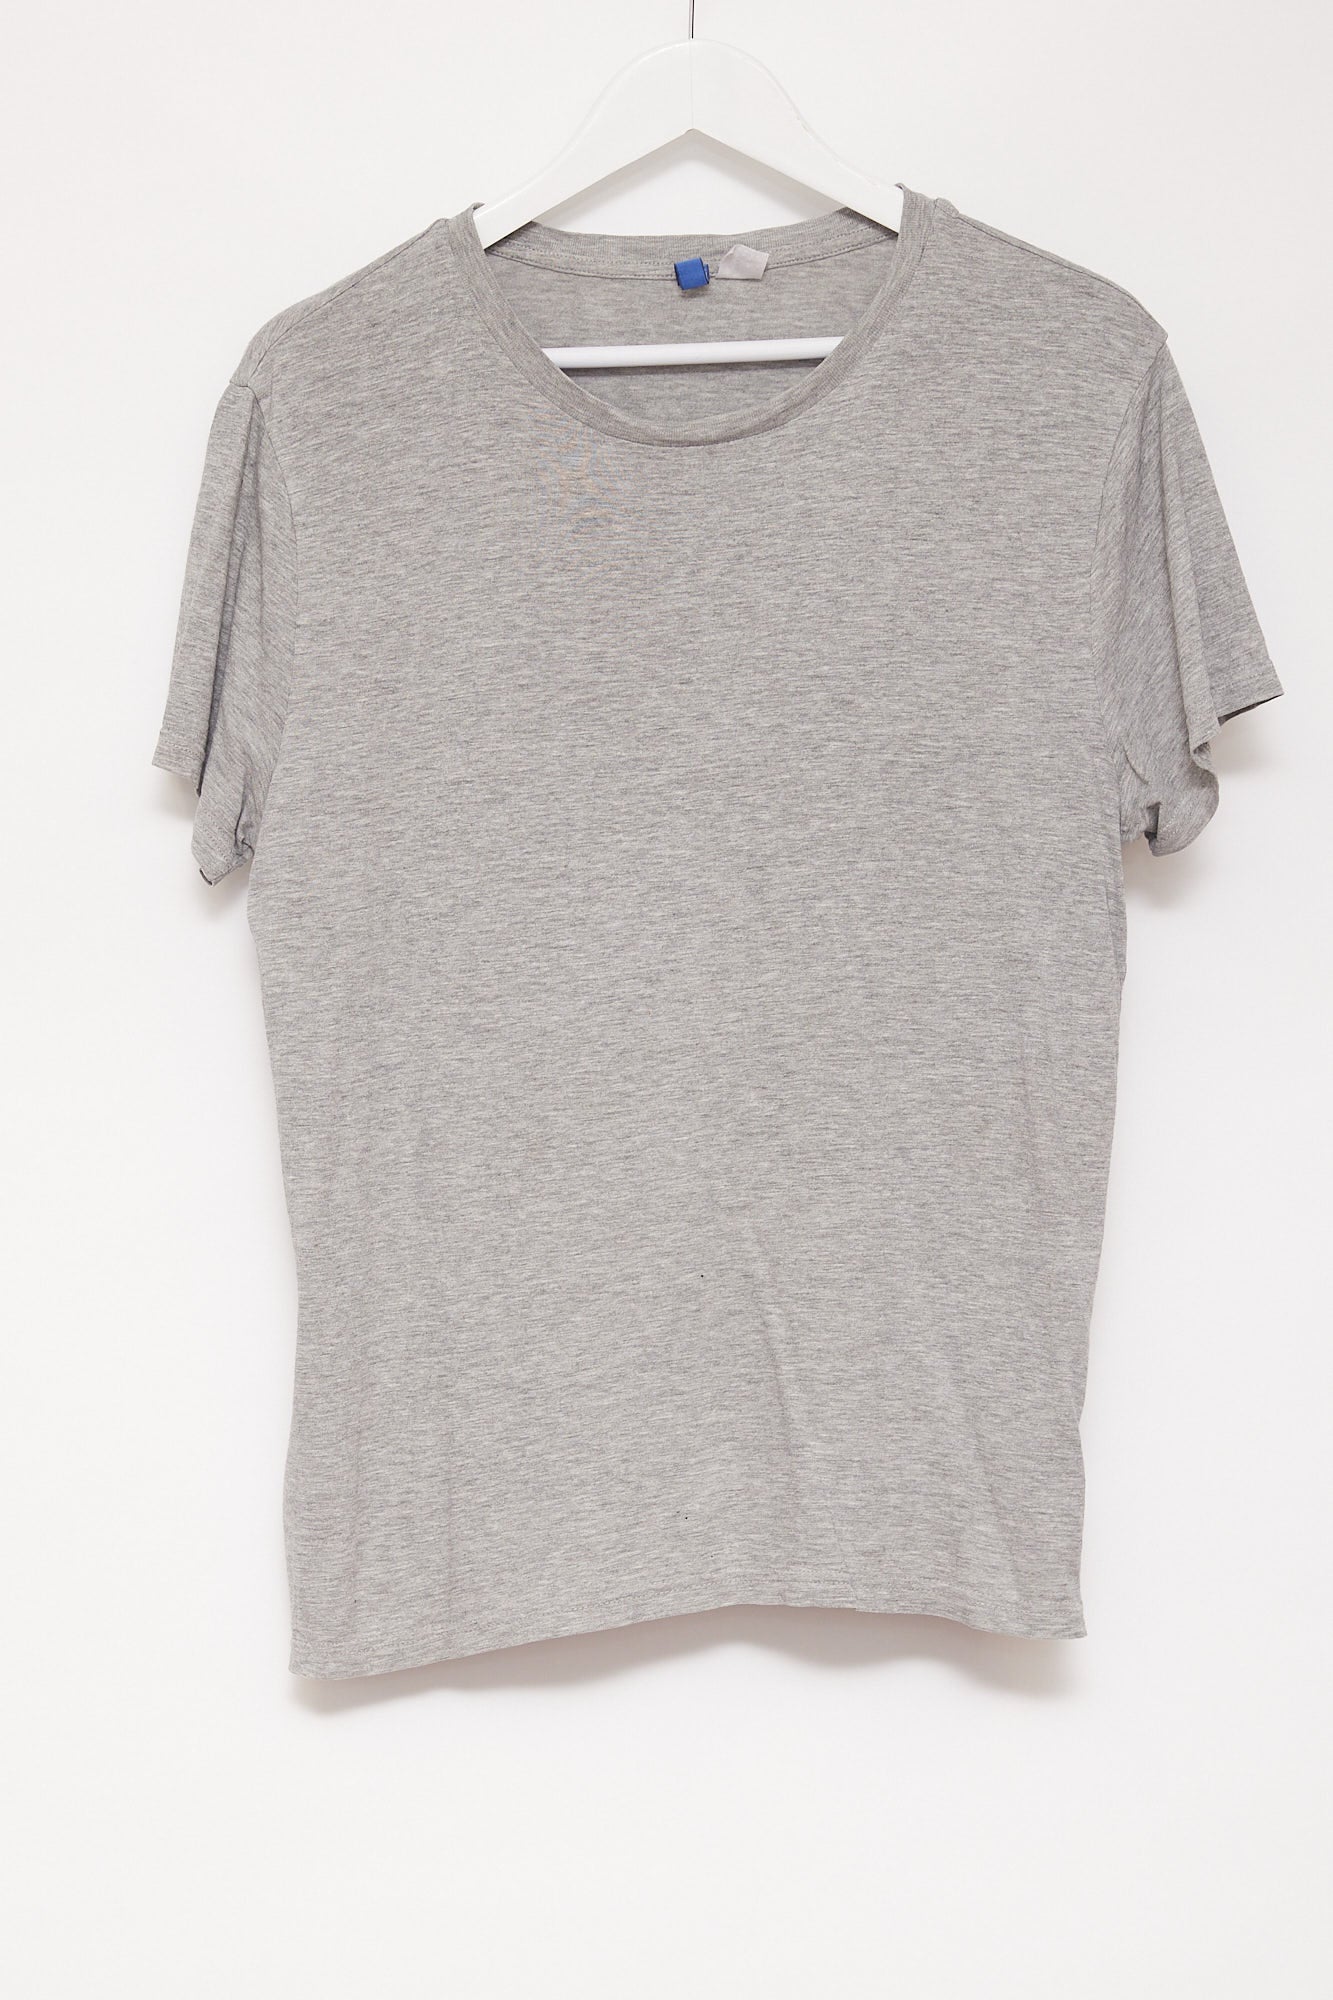 Mens H&M Grey T-shirt size Medium